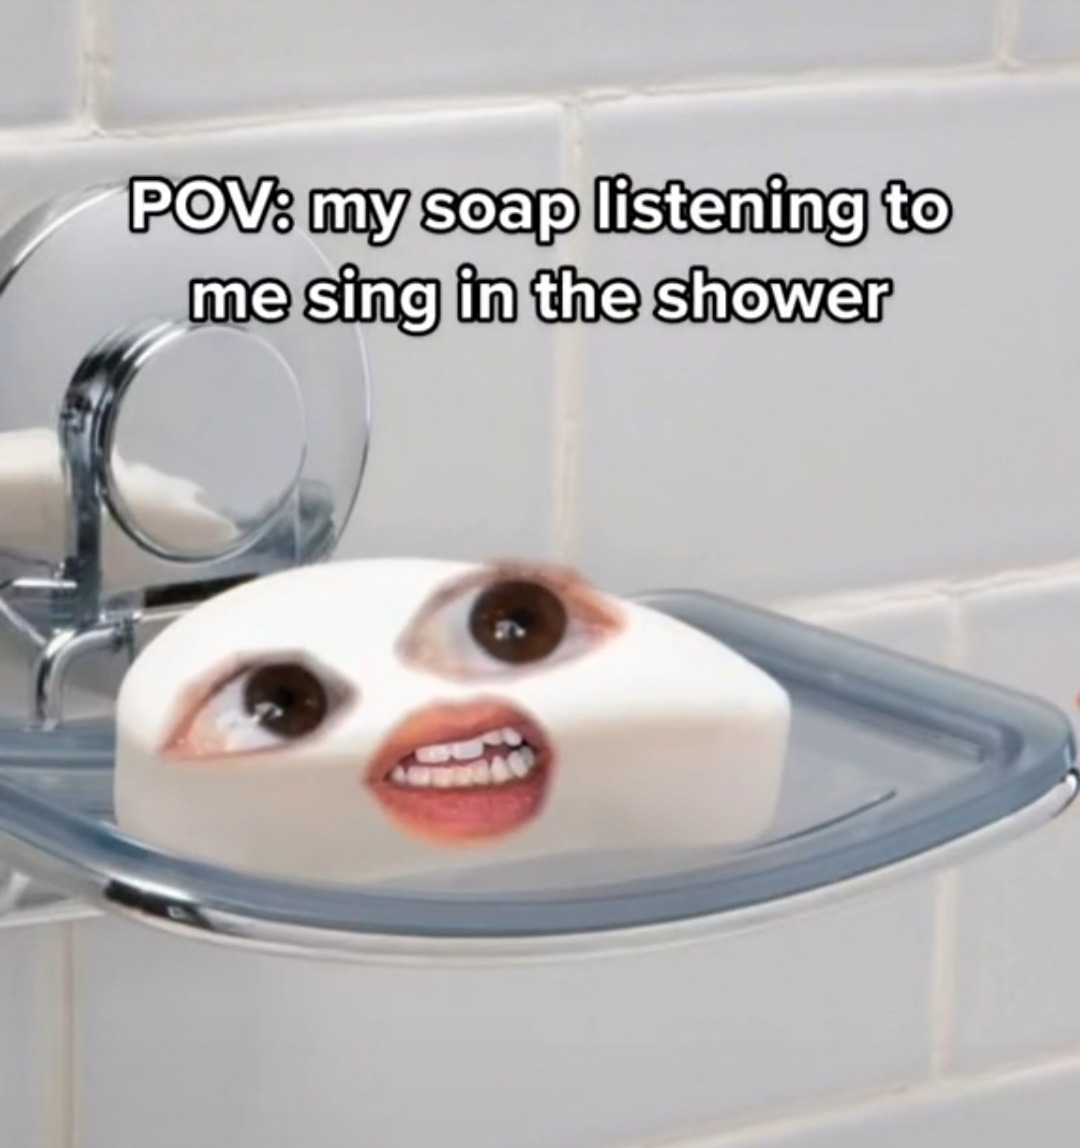 Poor soap - meme